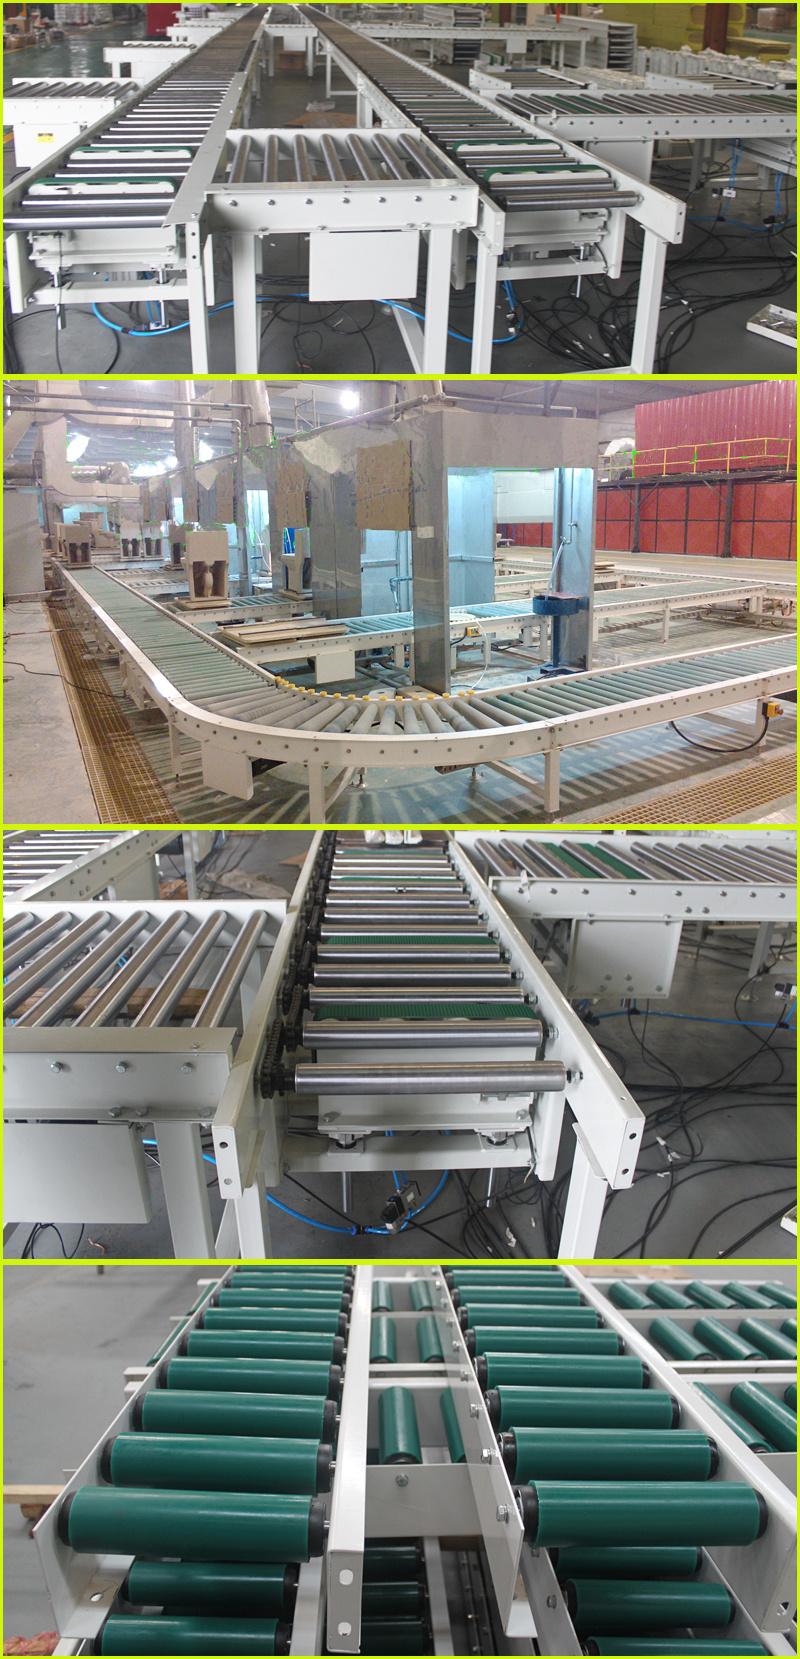 Aluminium Alloy Roller Turn Table Conveyor Motorsied for Plastic Crate